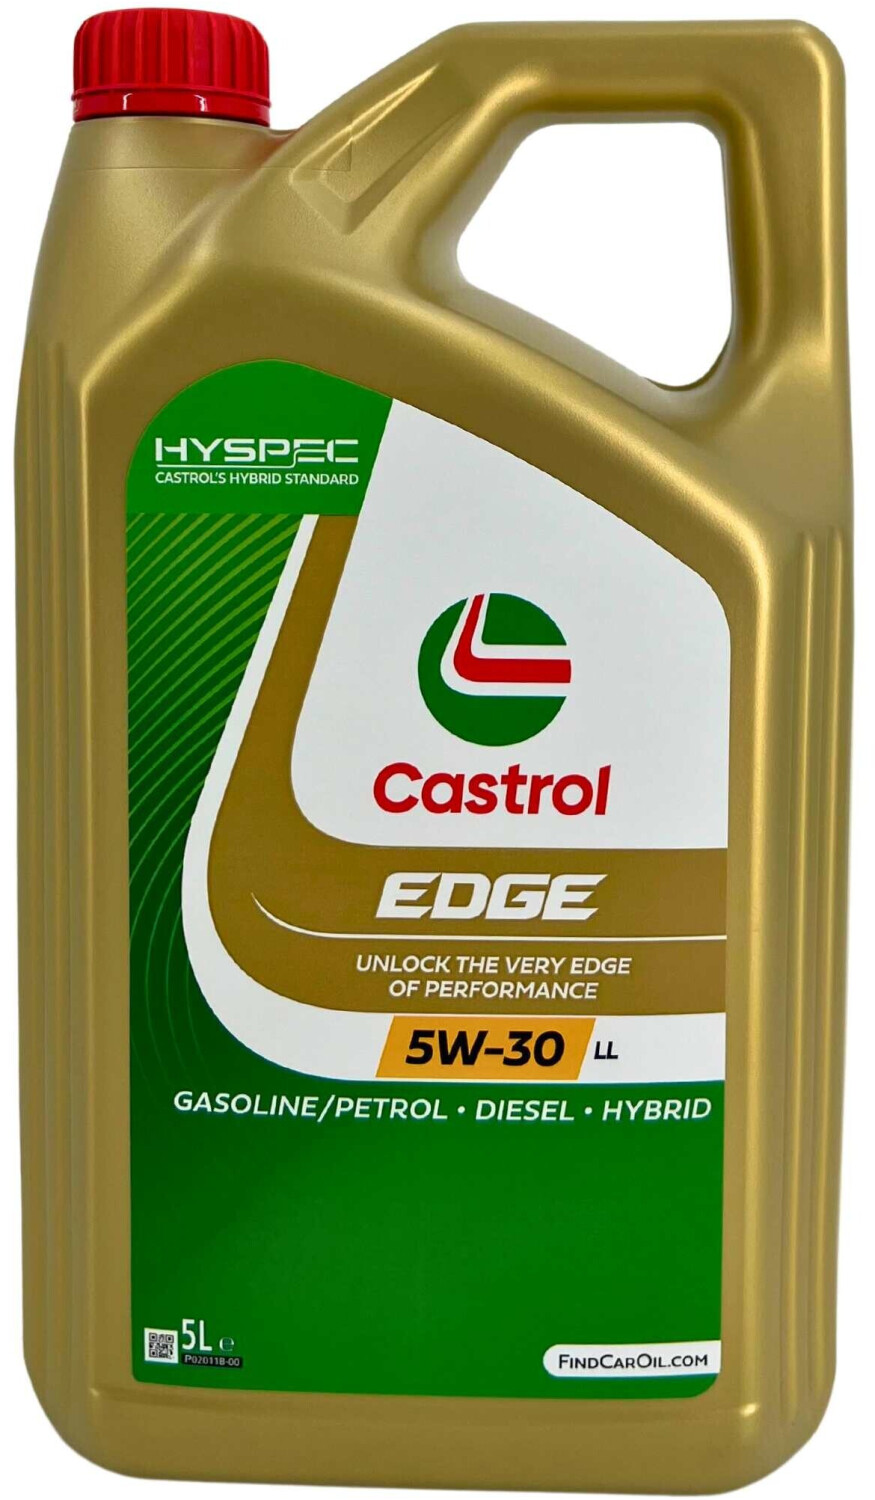 Buy Castrol EDGE Fluid Titanium 5W-30 LL from £10.35 (Today